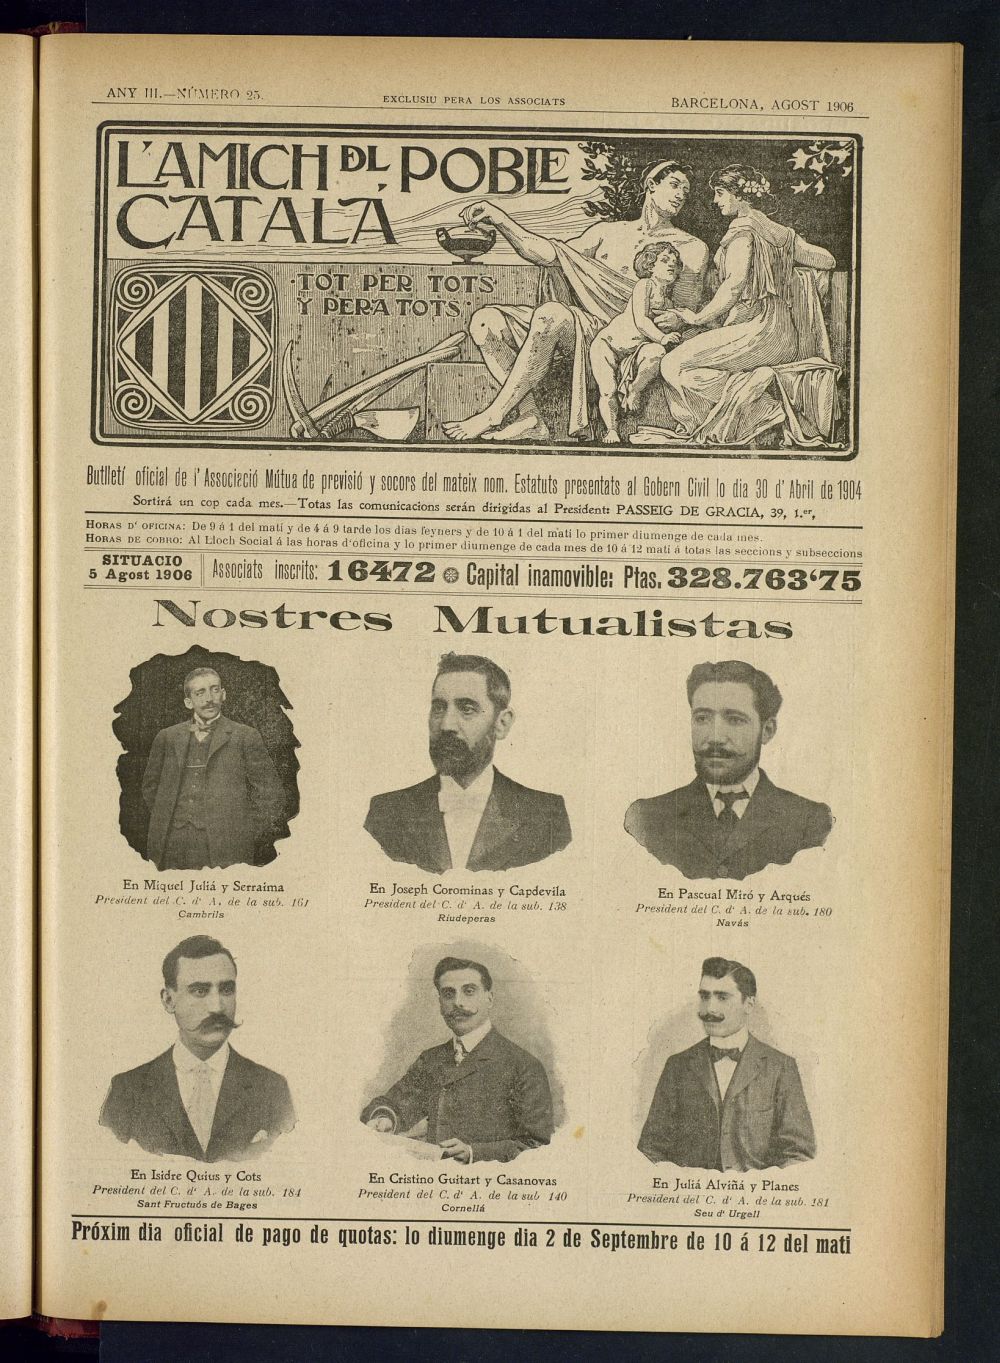 Lamich del poble catal: butllet oficial de lassociacio, ques publicara una volta cada mes de agost de 1906